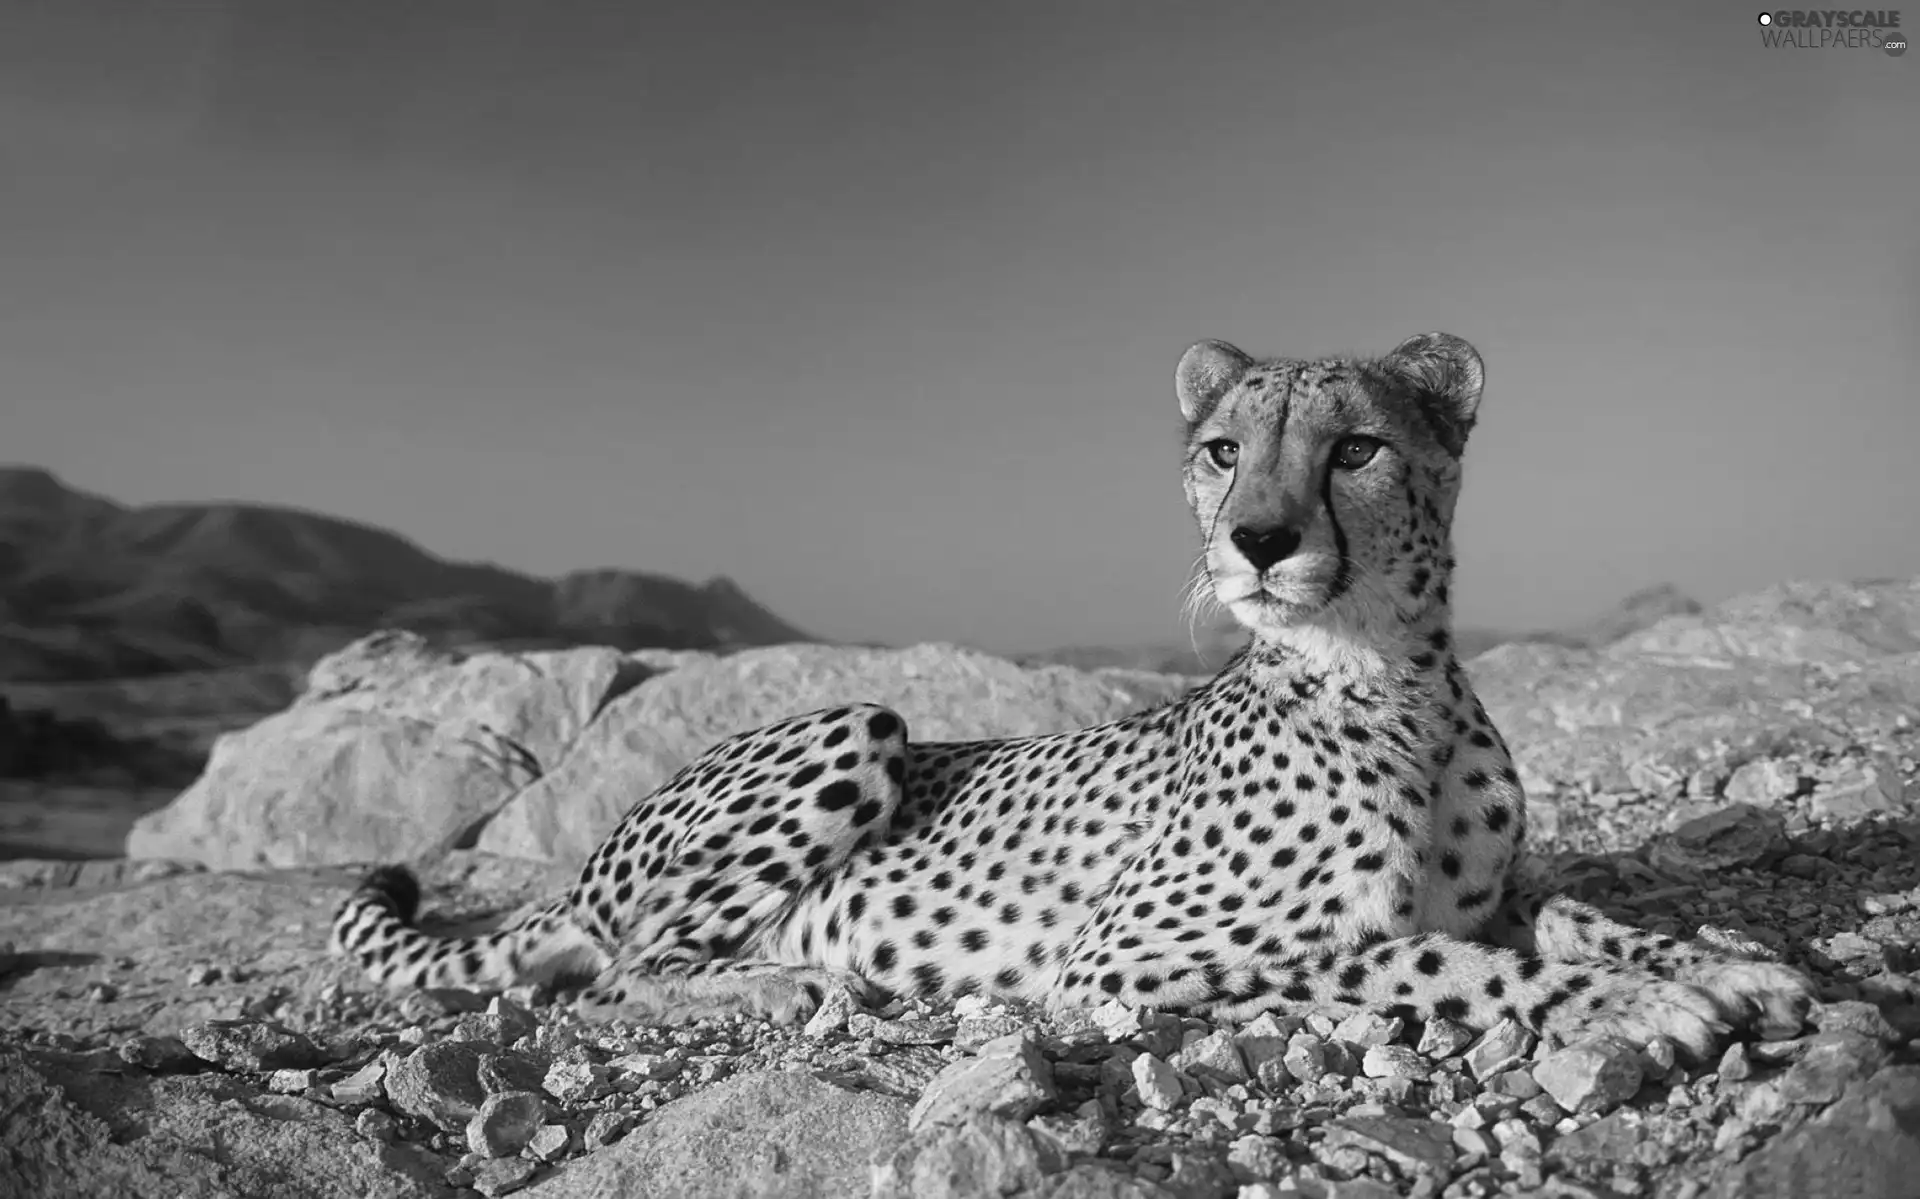 Cheetah, Sky, rocks